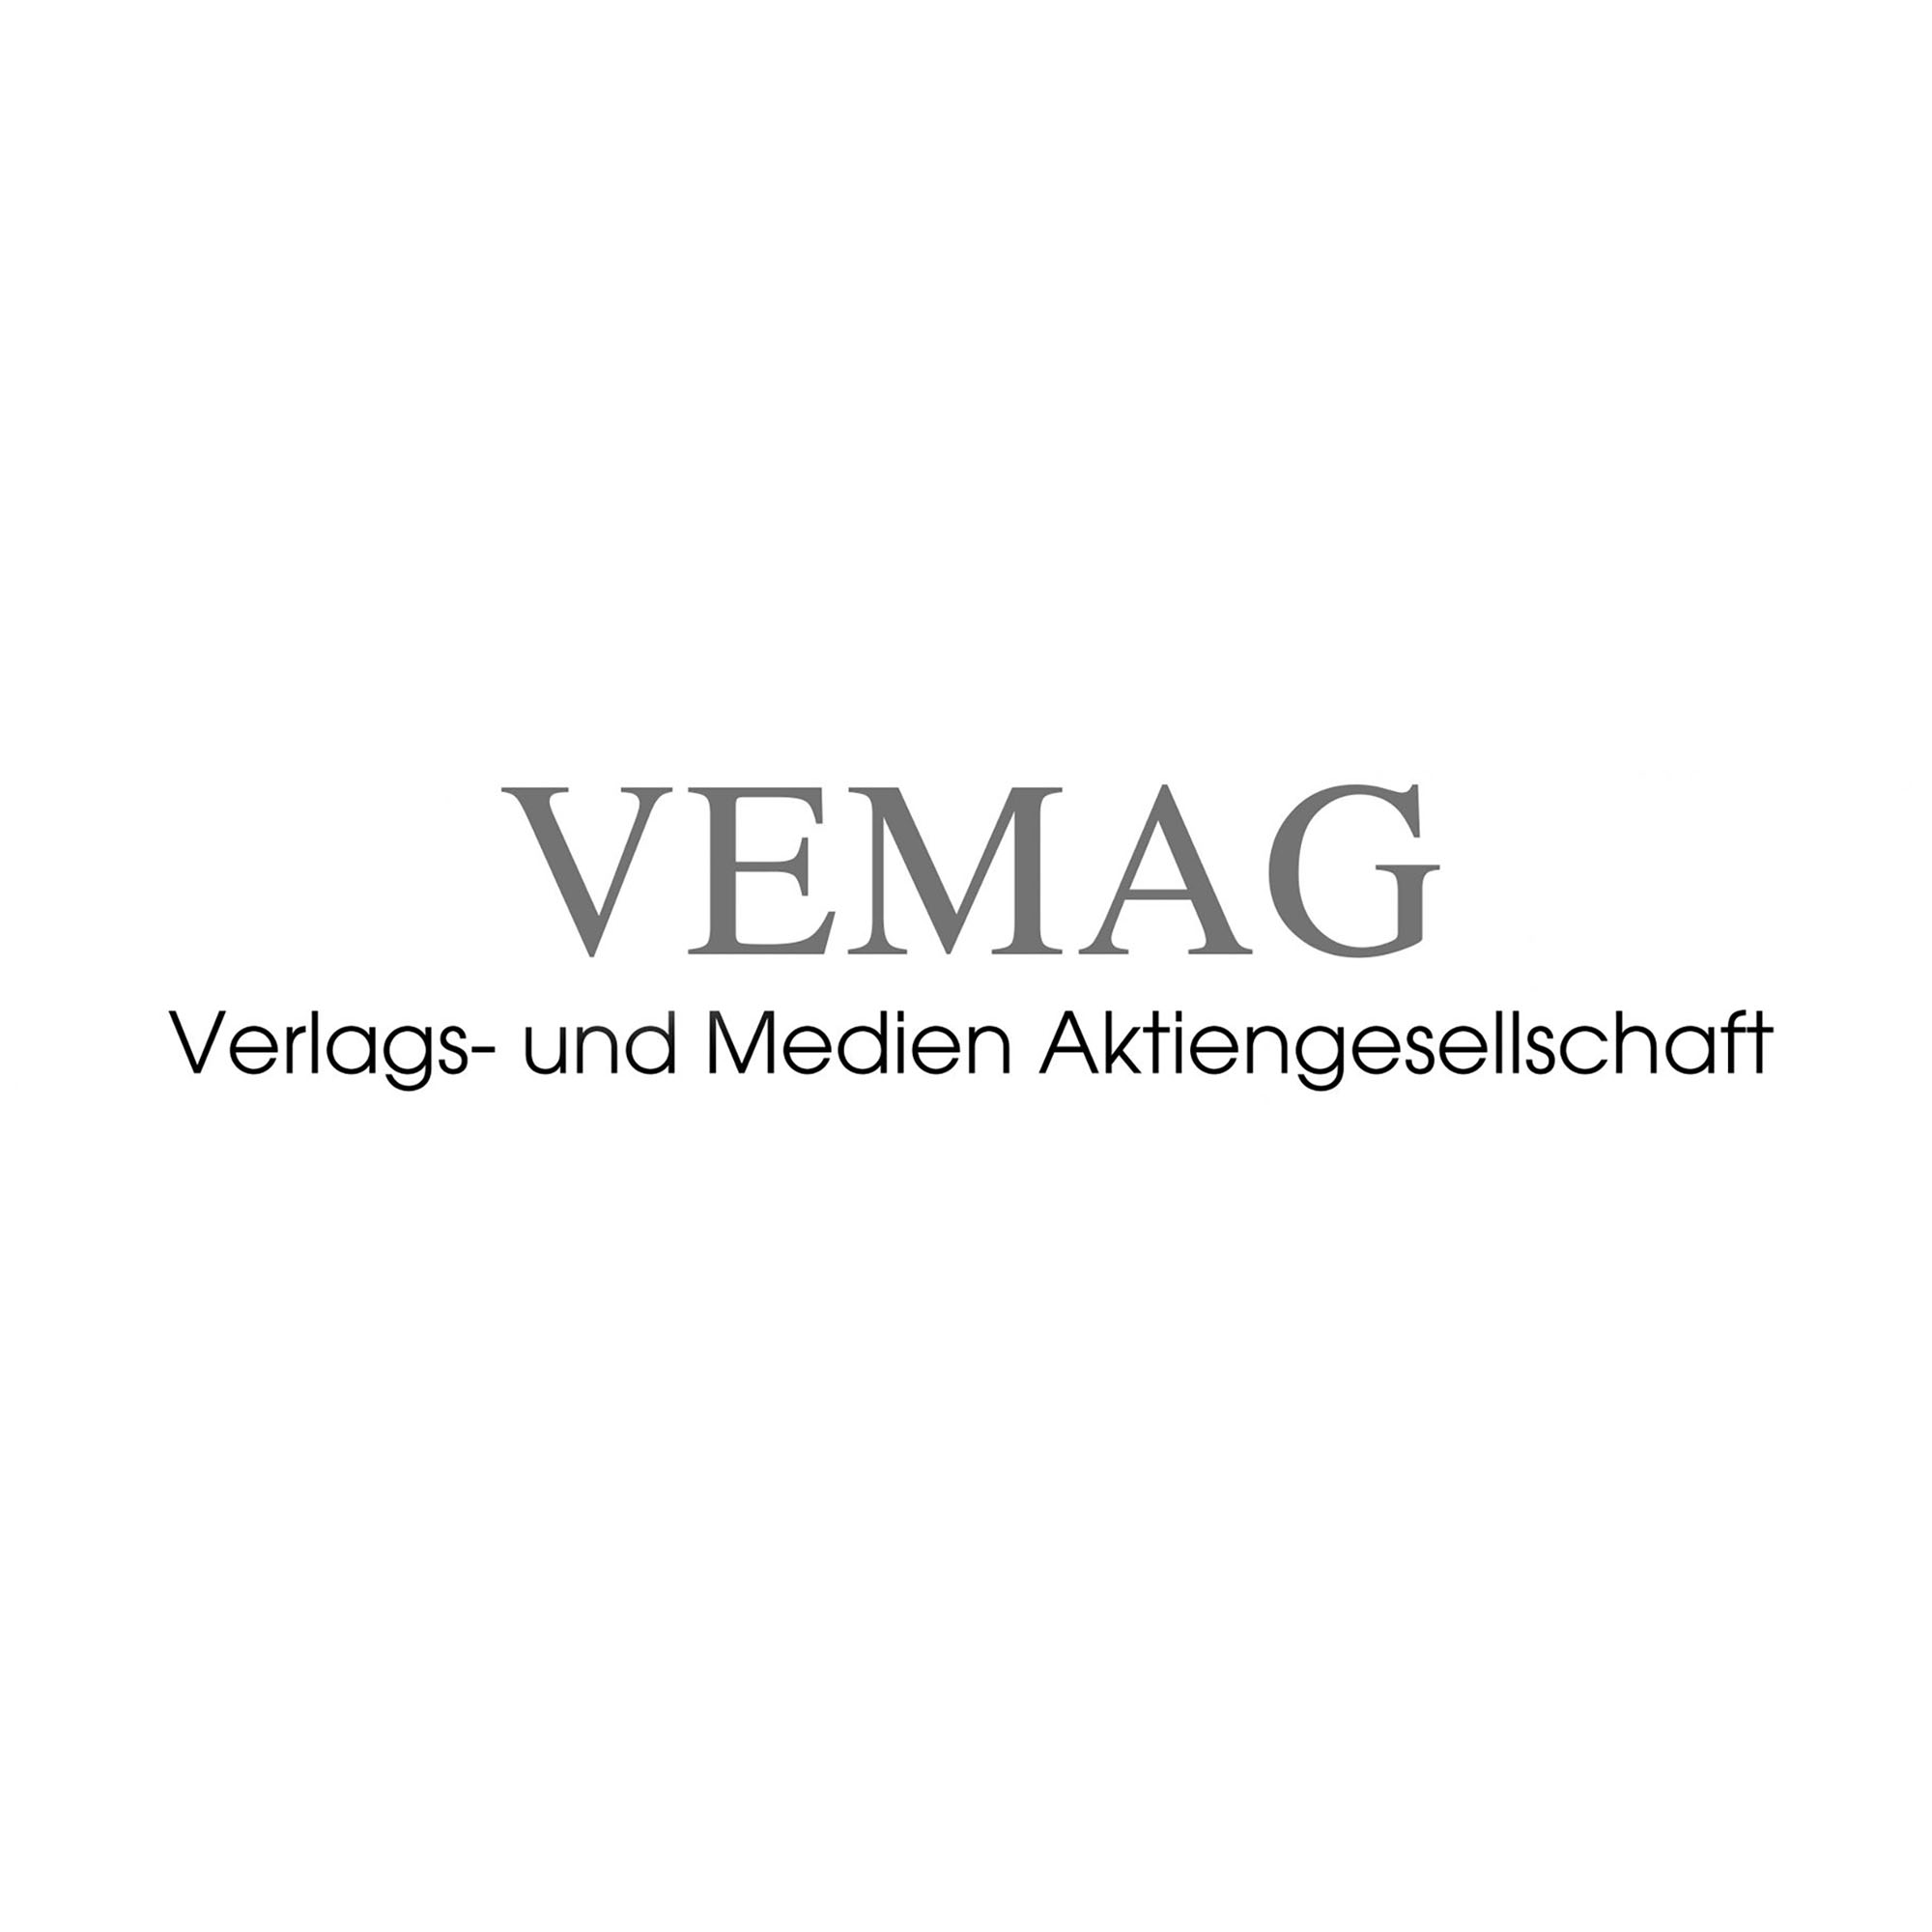 Vemag_Logo_NEU